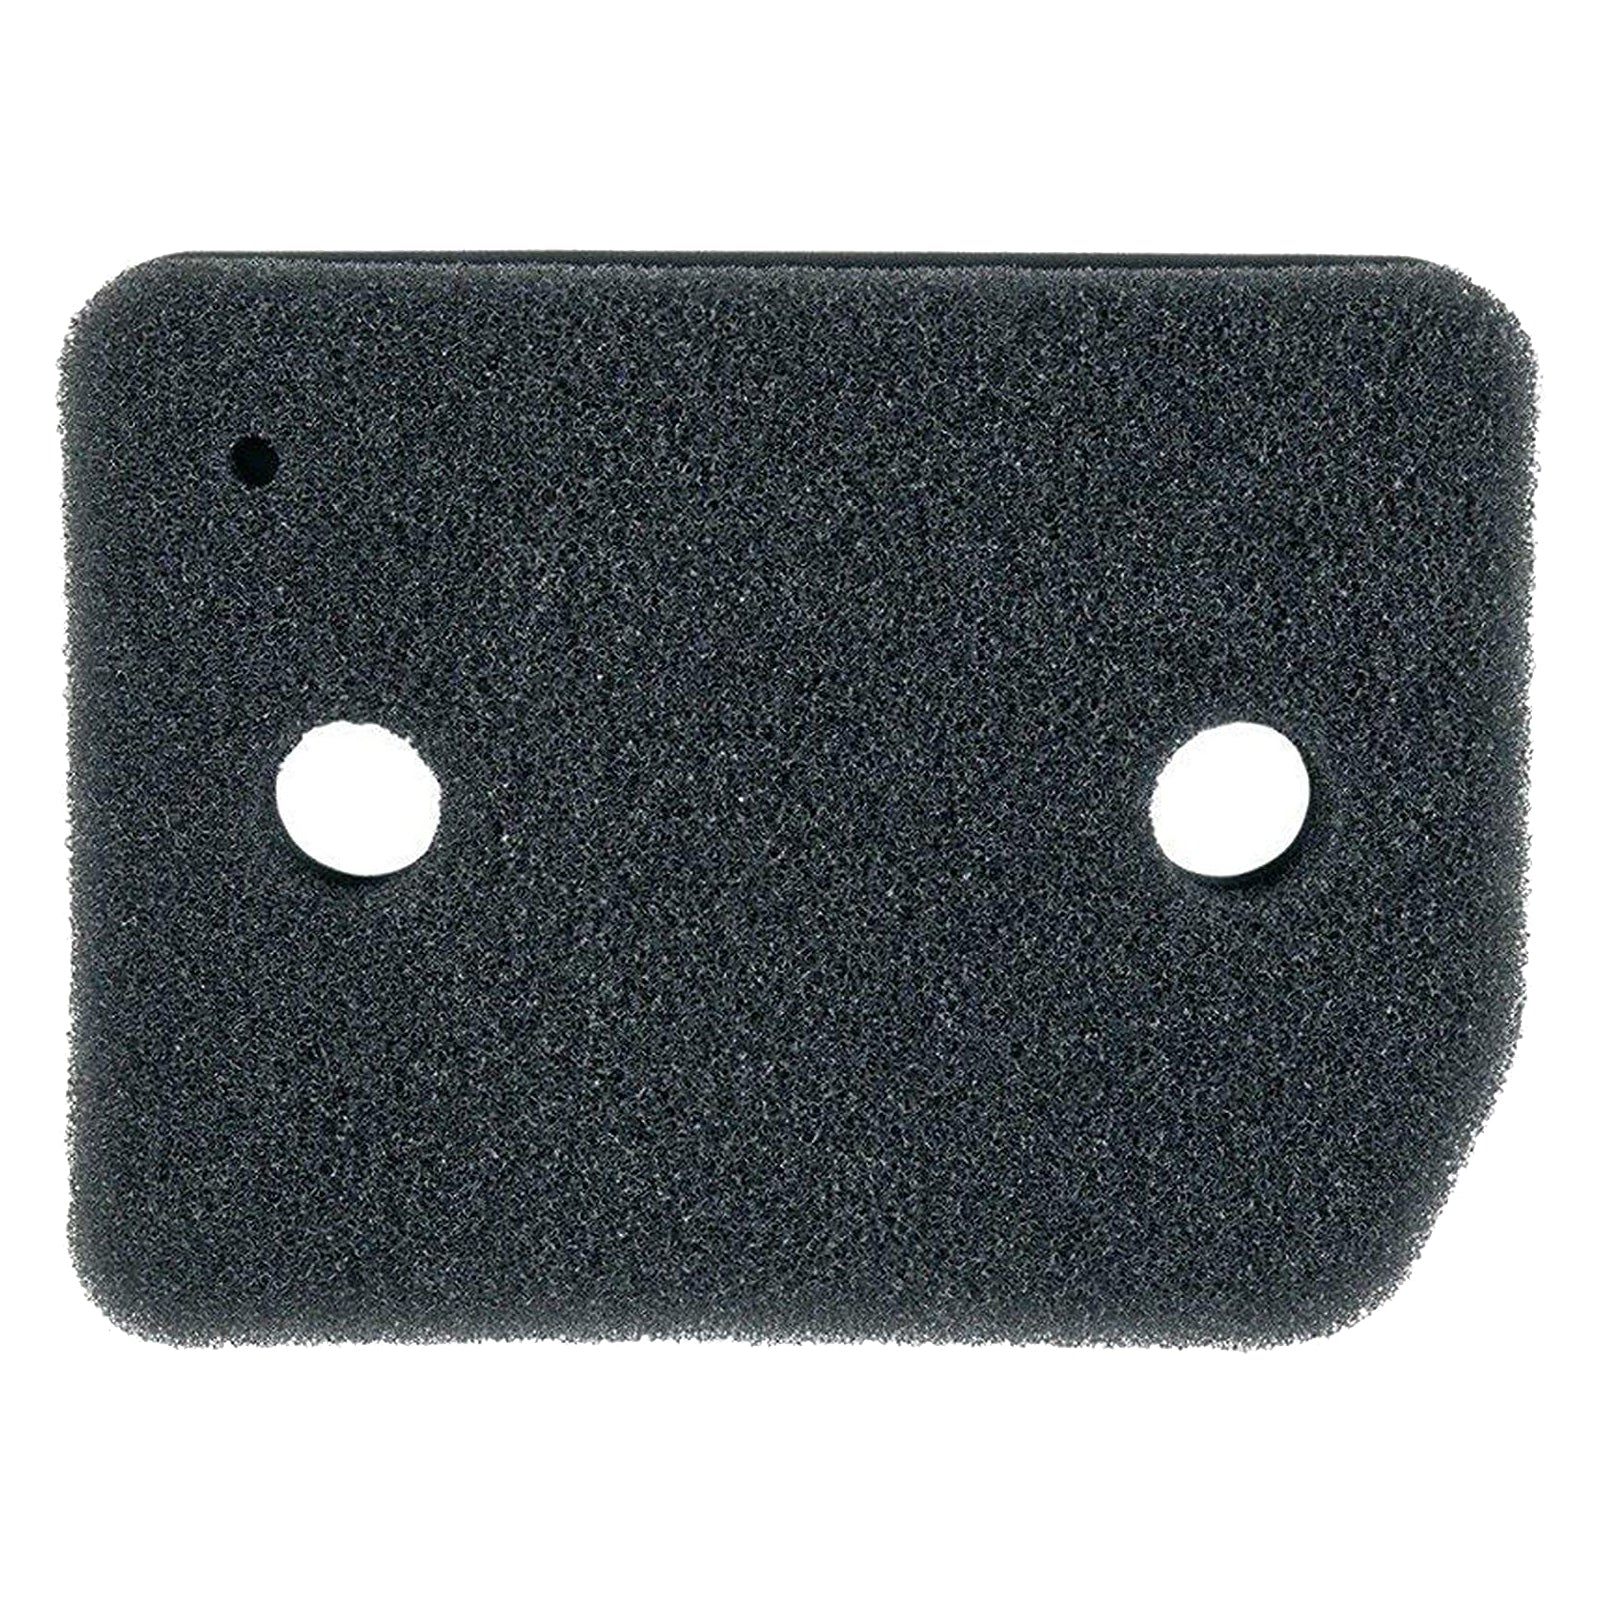 Condenser Module Foam Filter Sponge for MIELE Tumble Dryer x 2